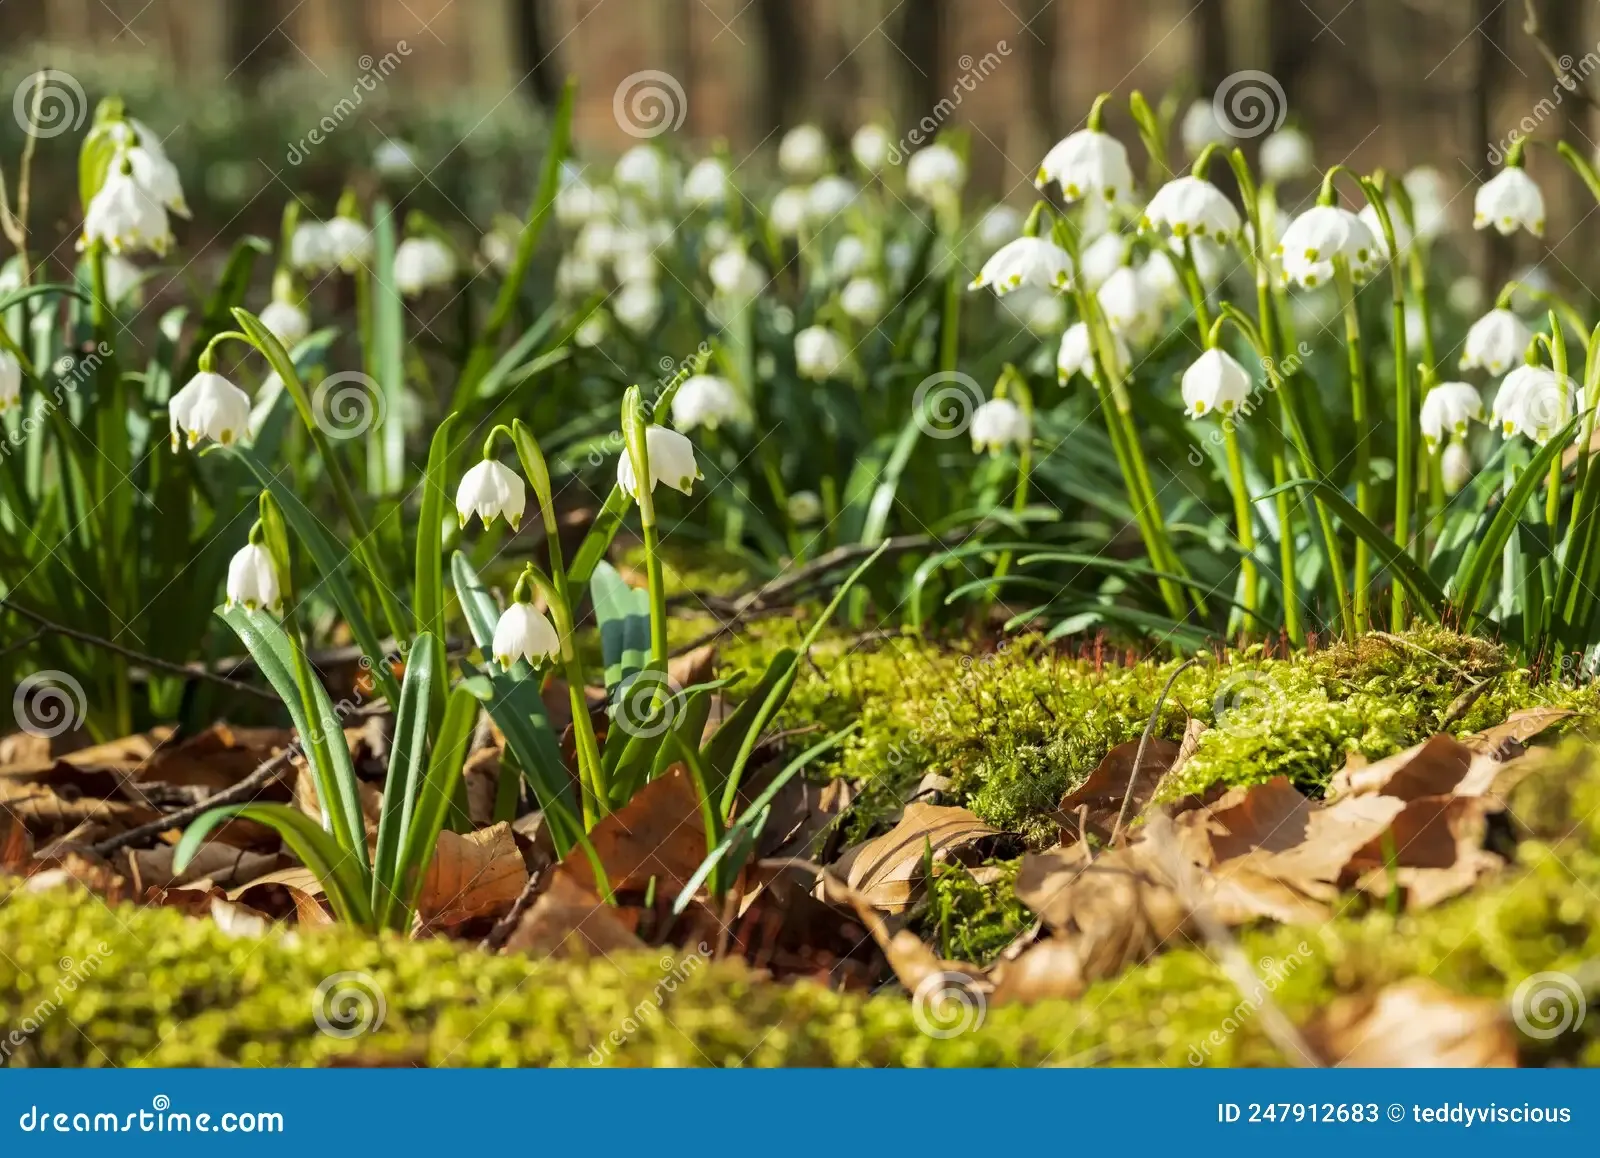 flowering-spring-snowflake-leucojum-vernum-growing-foliage-moss-covered-tree-roots-forest-weserbergland-germany-247912683.jpg